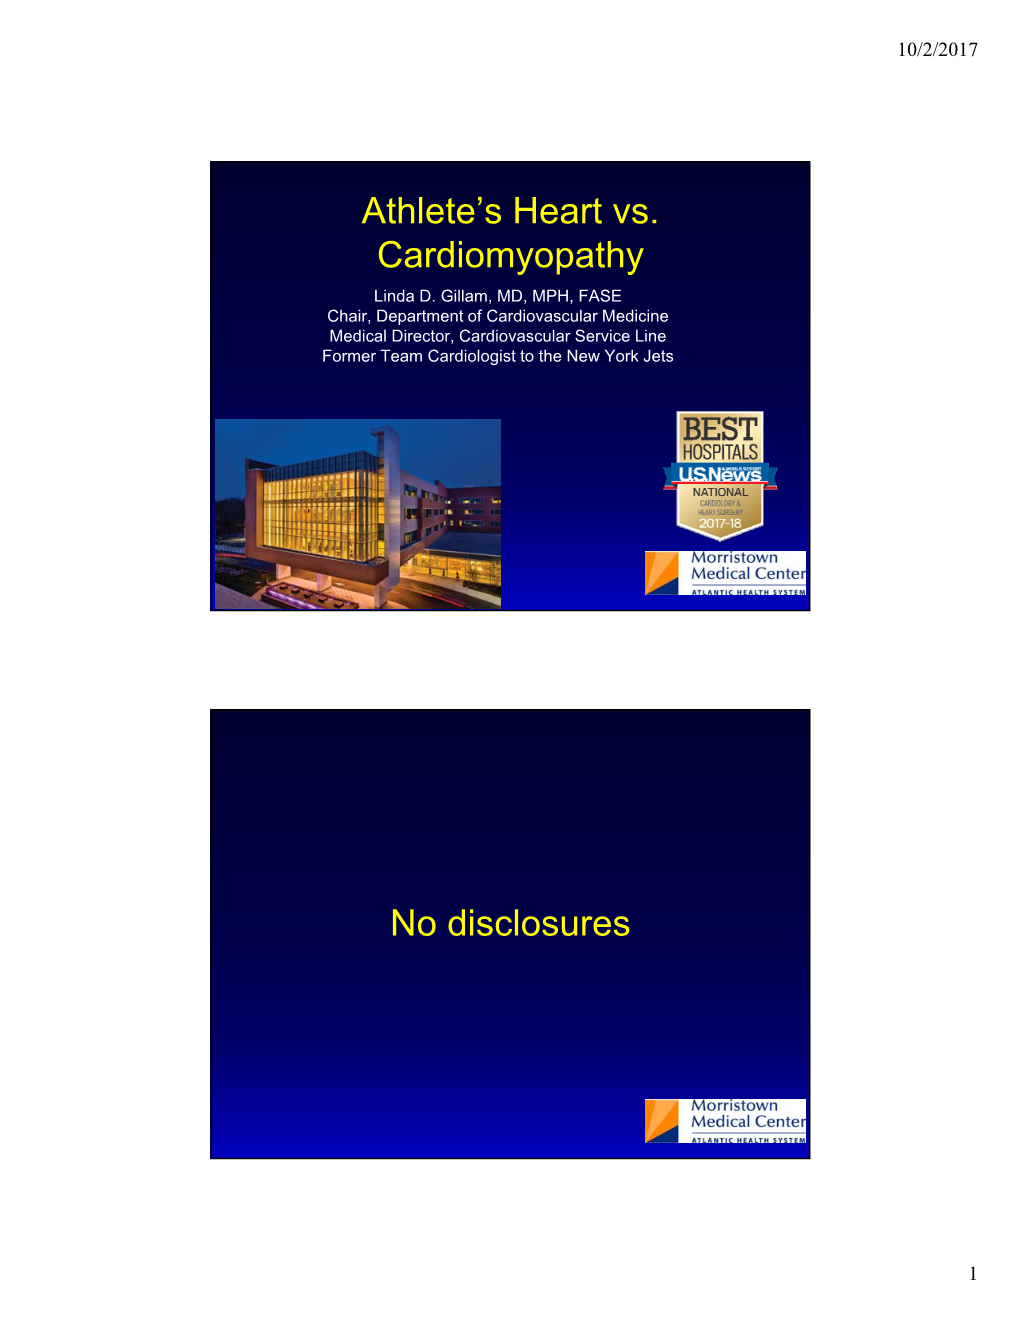 Athlete's Heart Vs. Cardiomyopathy No Disclosures